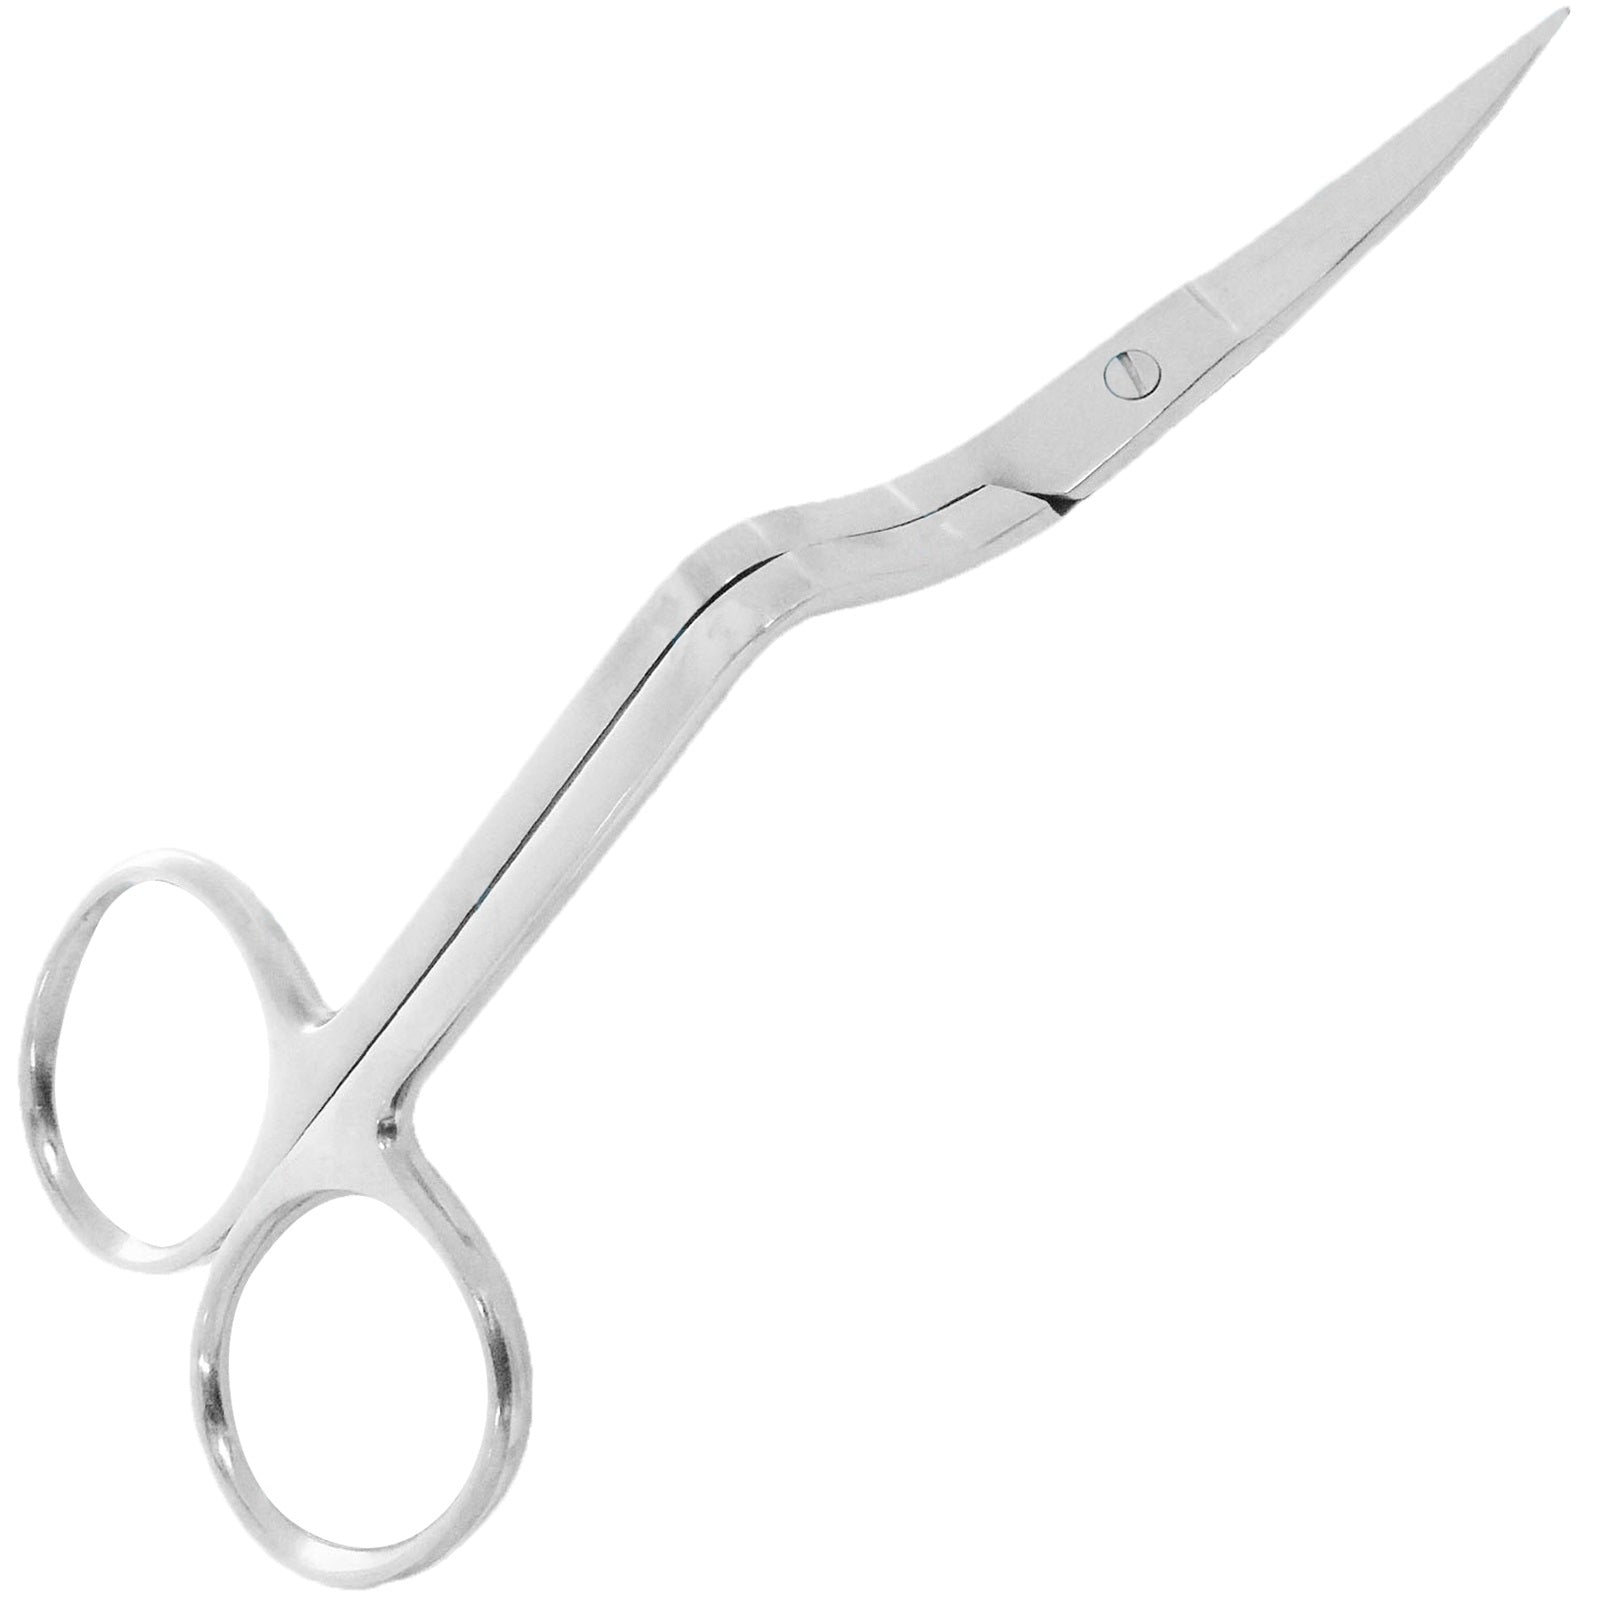 Applique Duckbill Scissors 5 inch Needlework Paddle Shaped Offset Handle  Bent